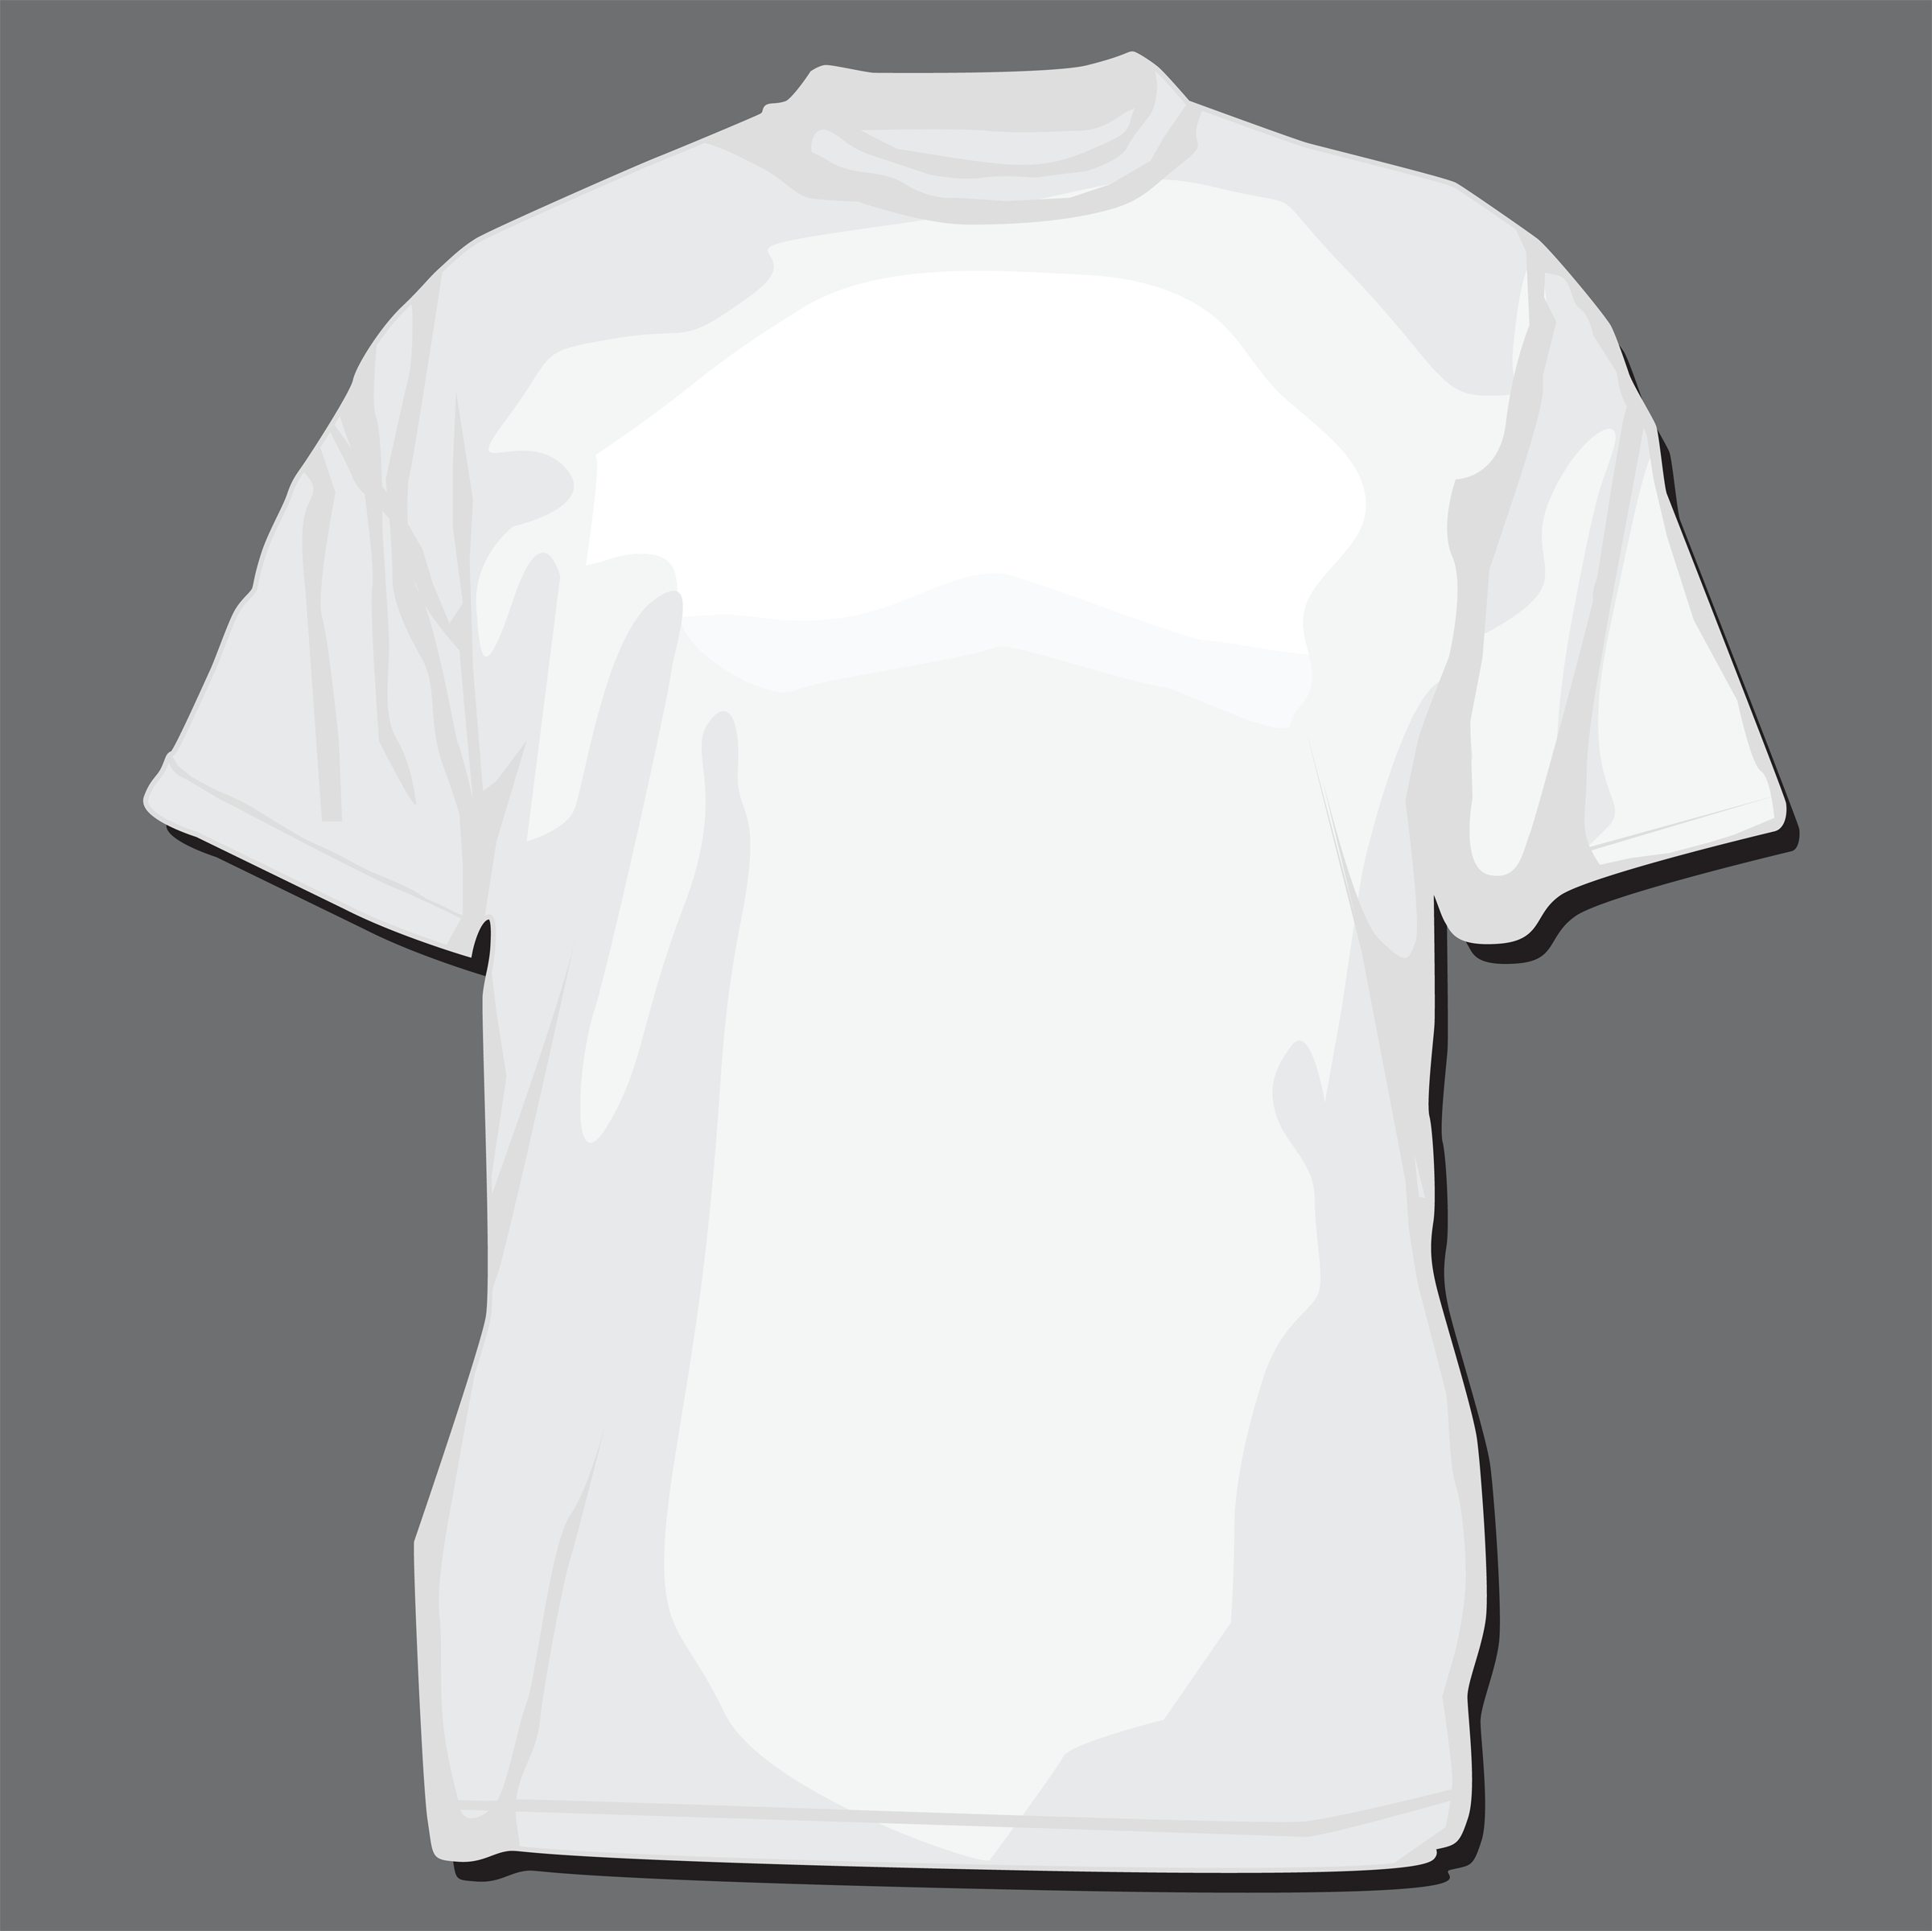 White Shirt Vector Template